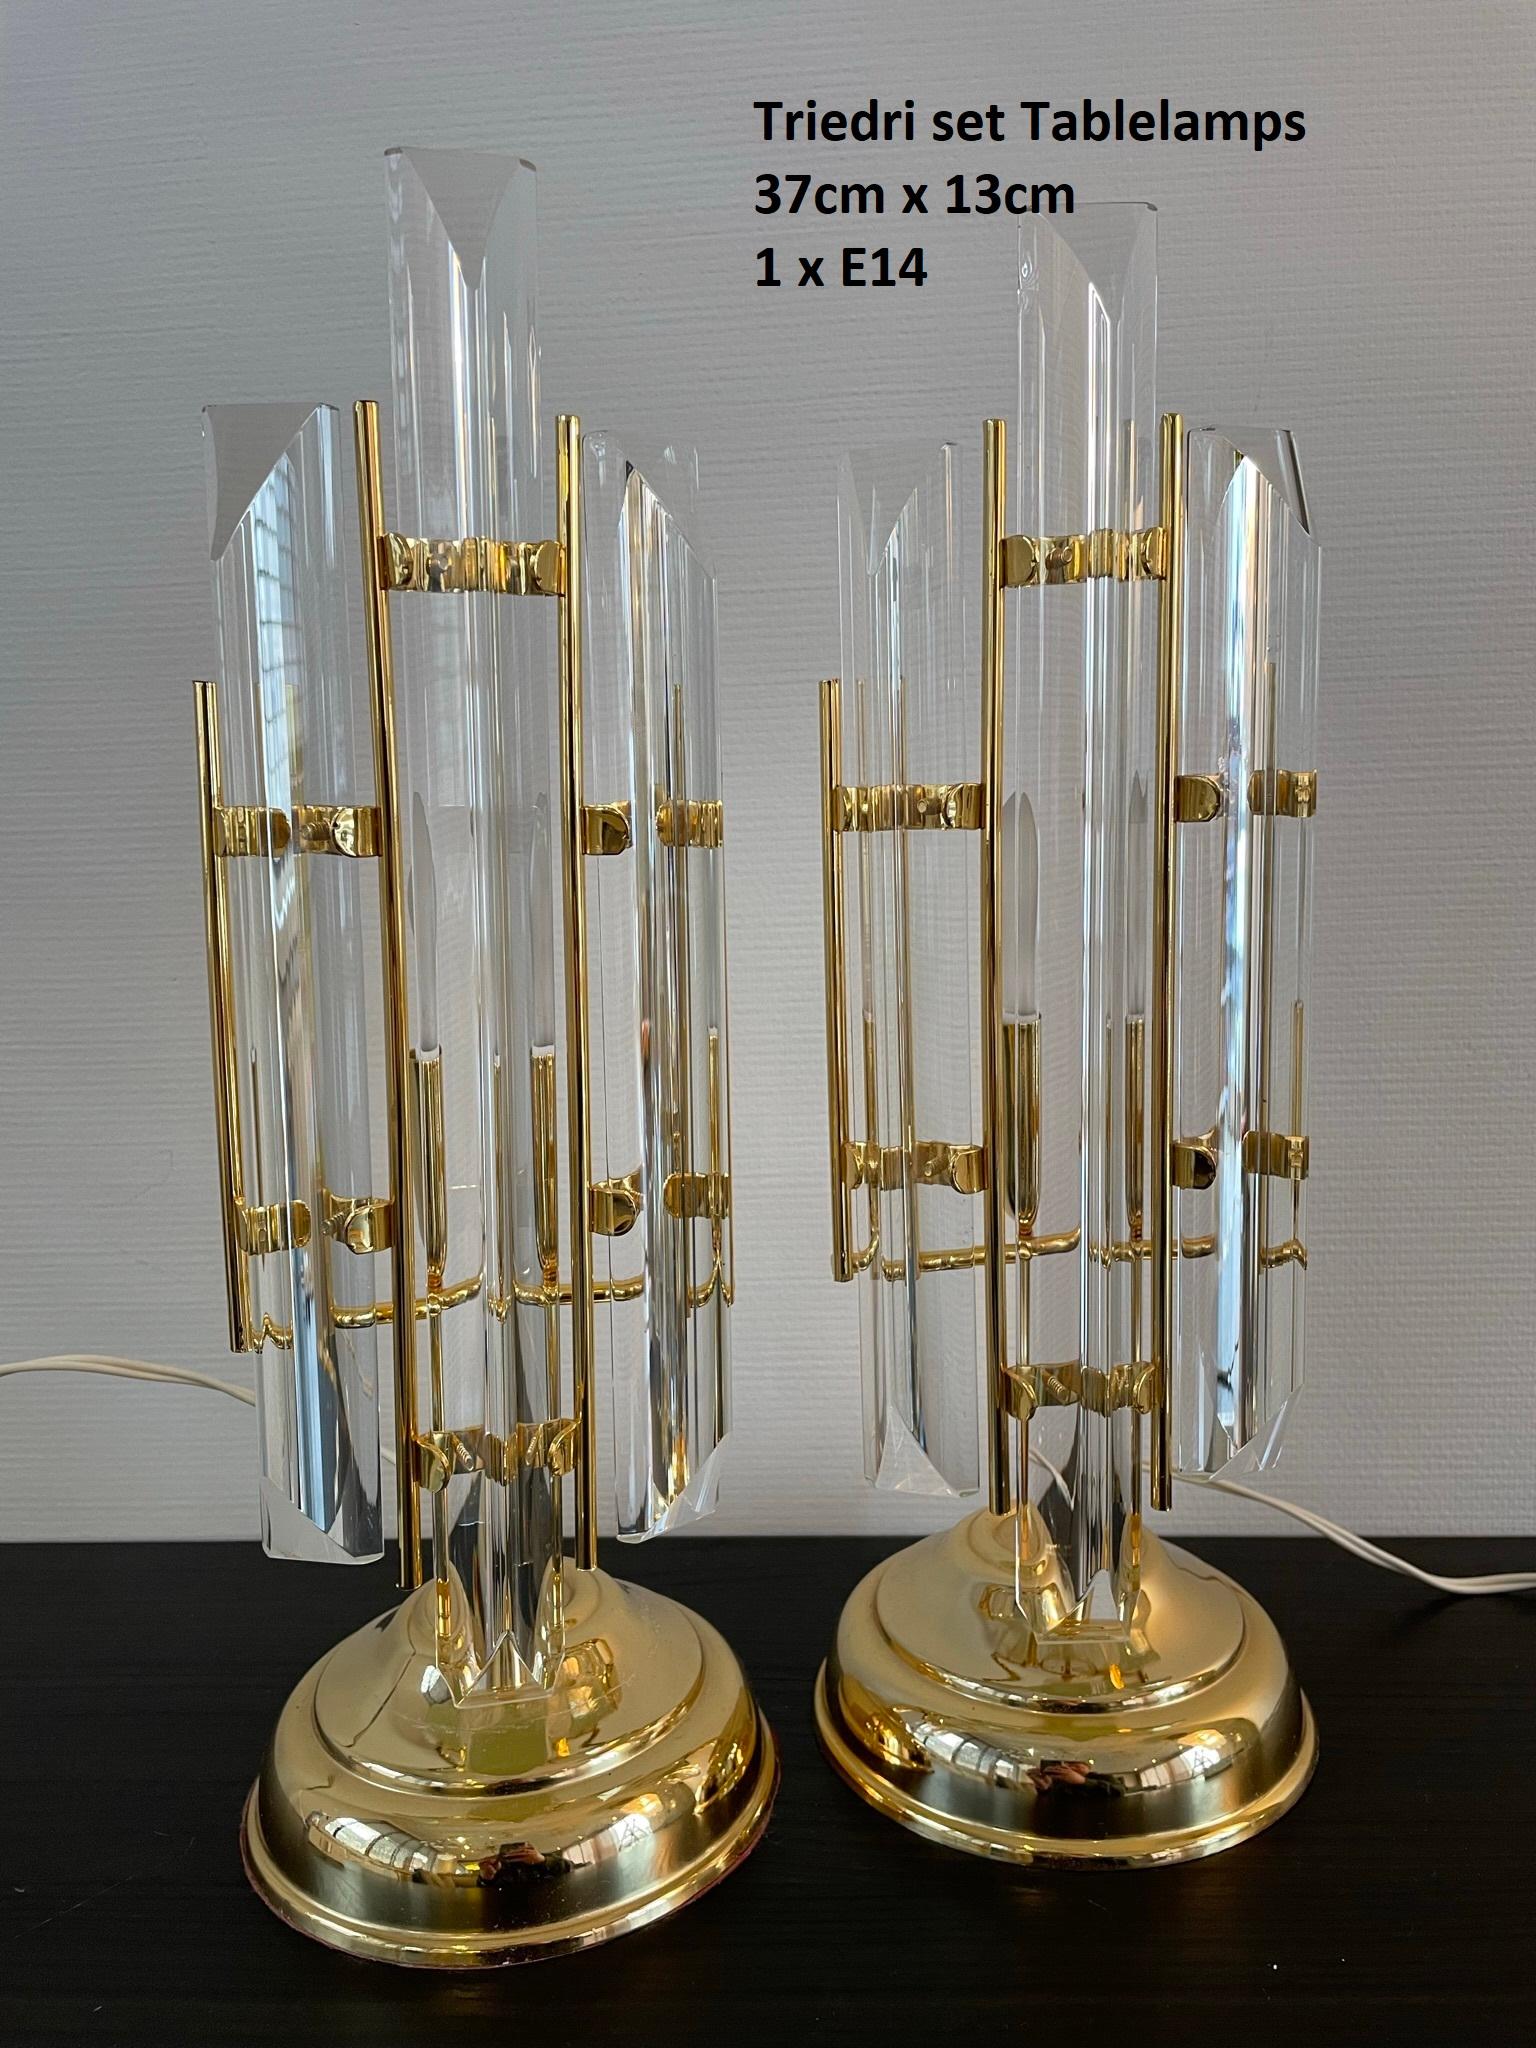 Hollywood Regency Pair of Triedri Table Lamps by Venini, 1970s